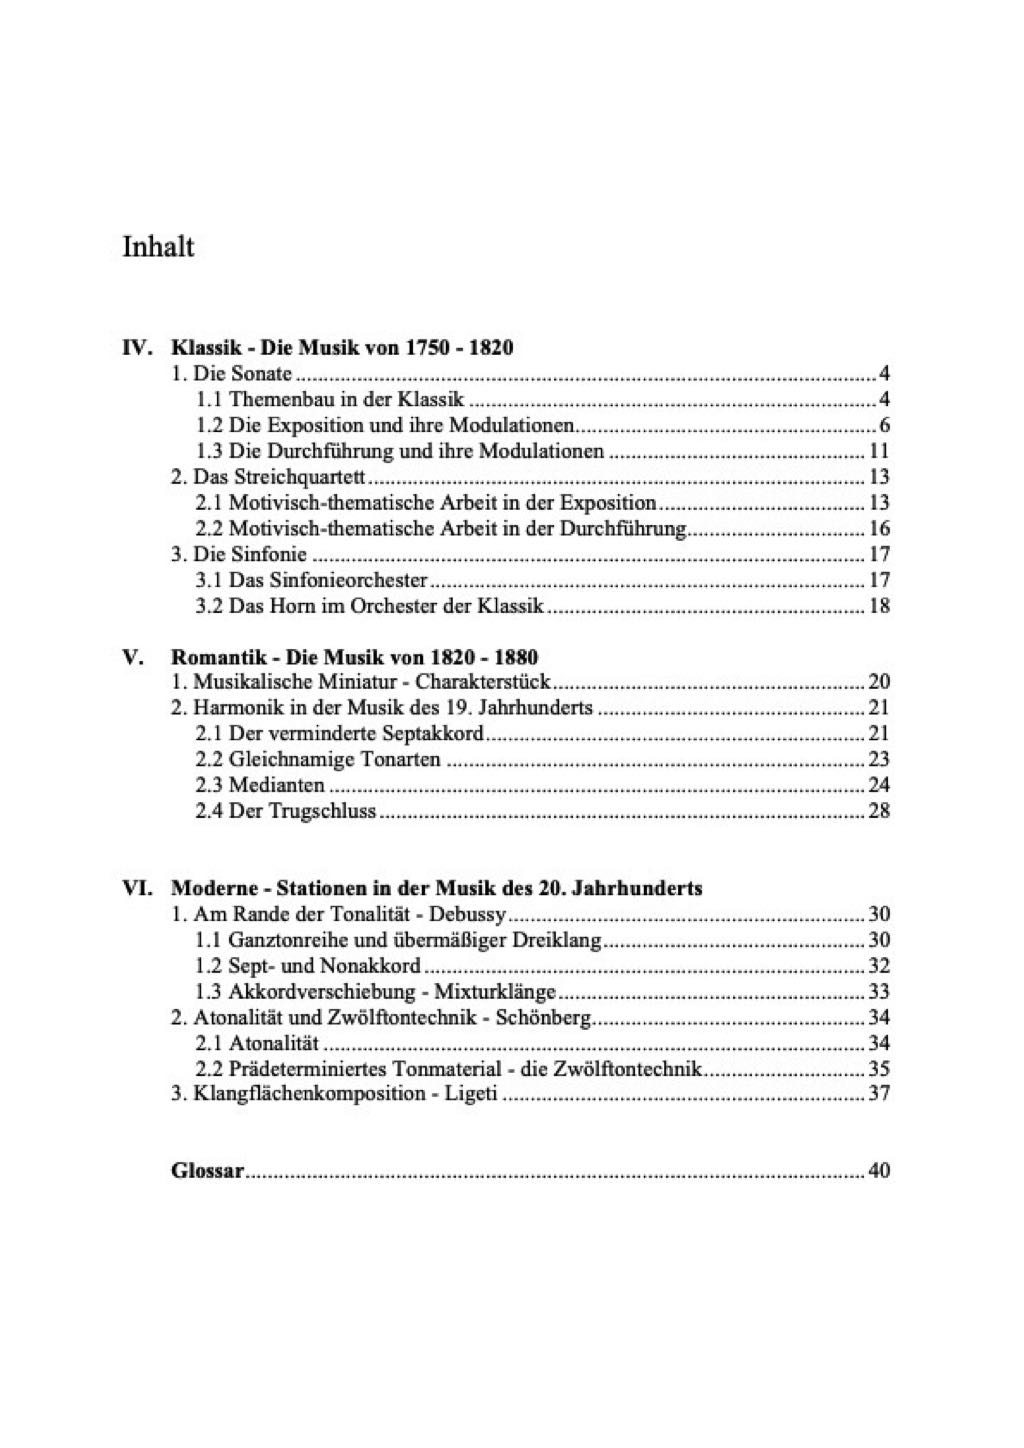 TF9-Abitur-Titelblatt-Inhalt